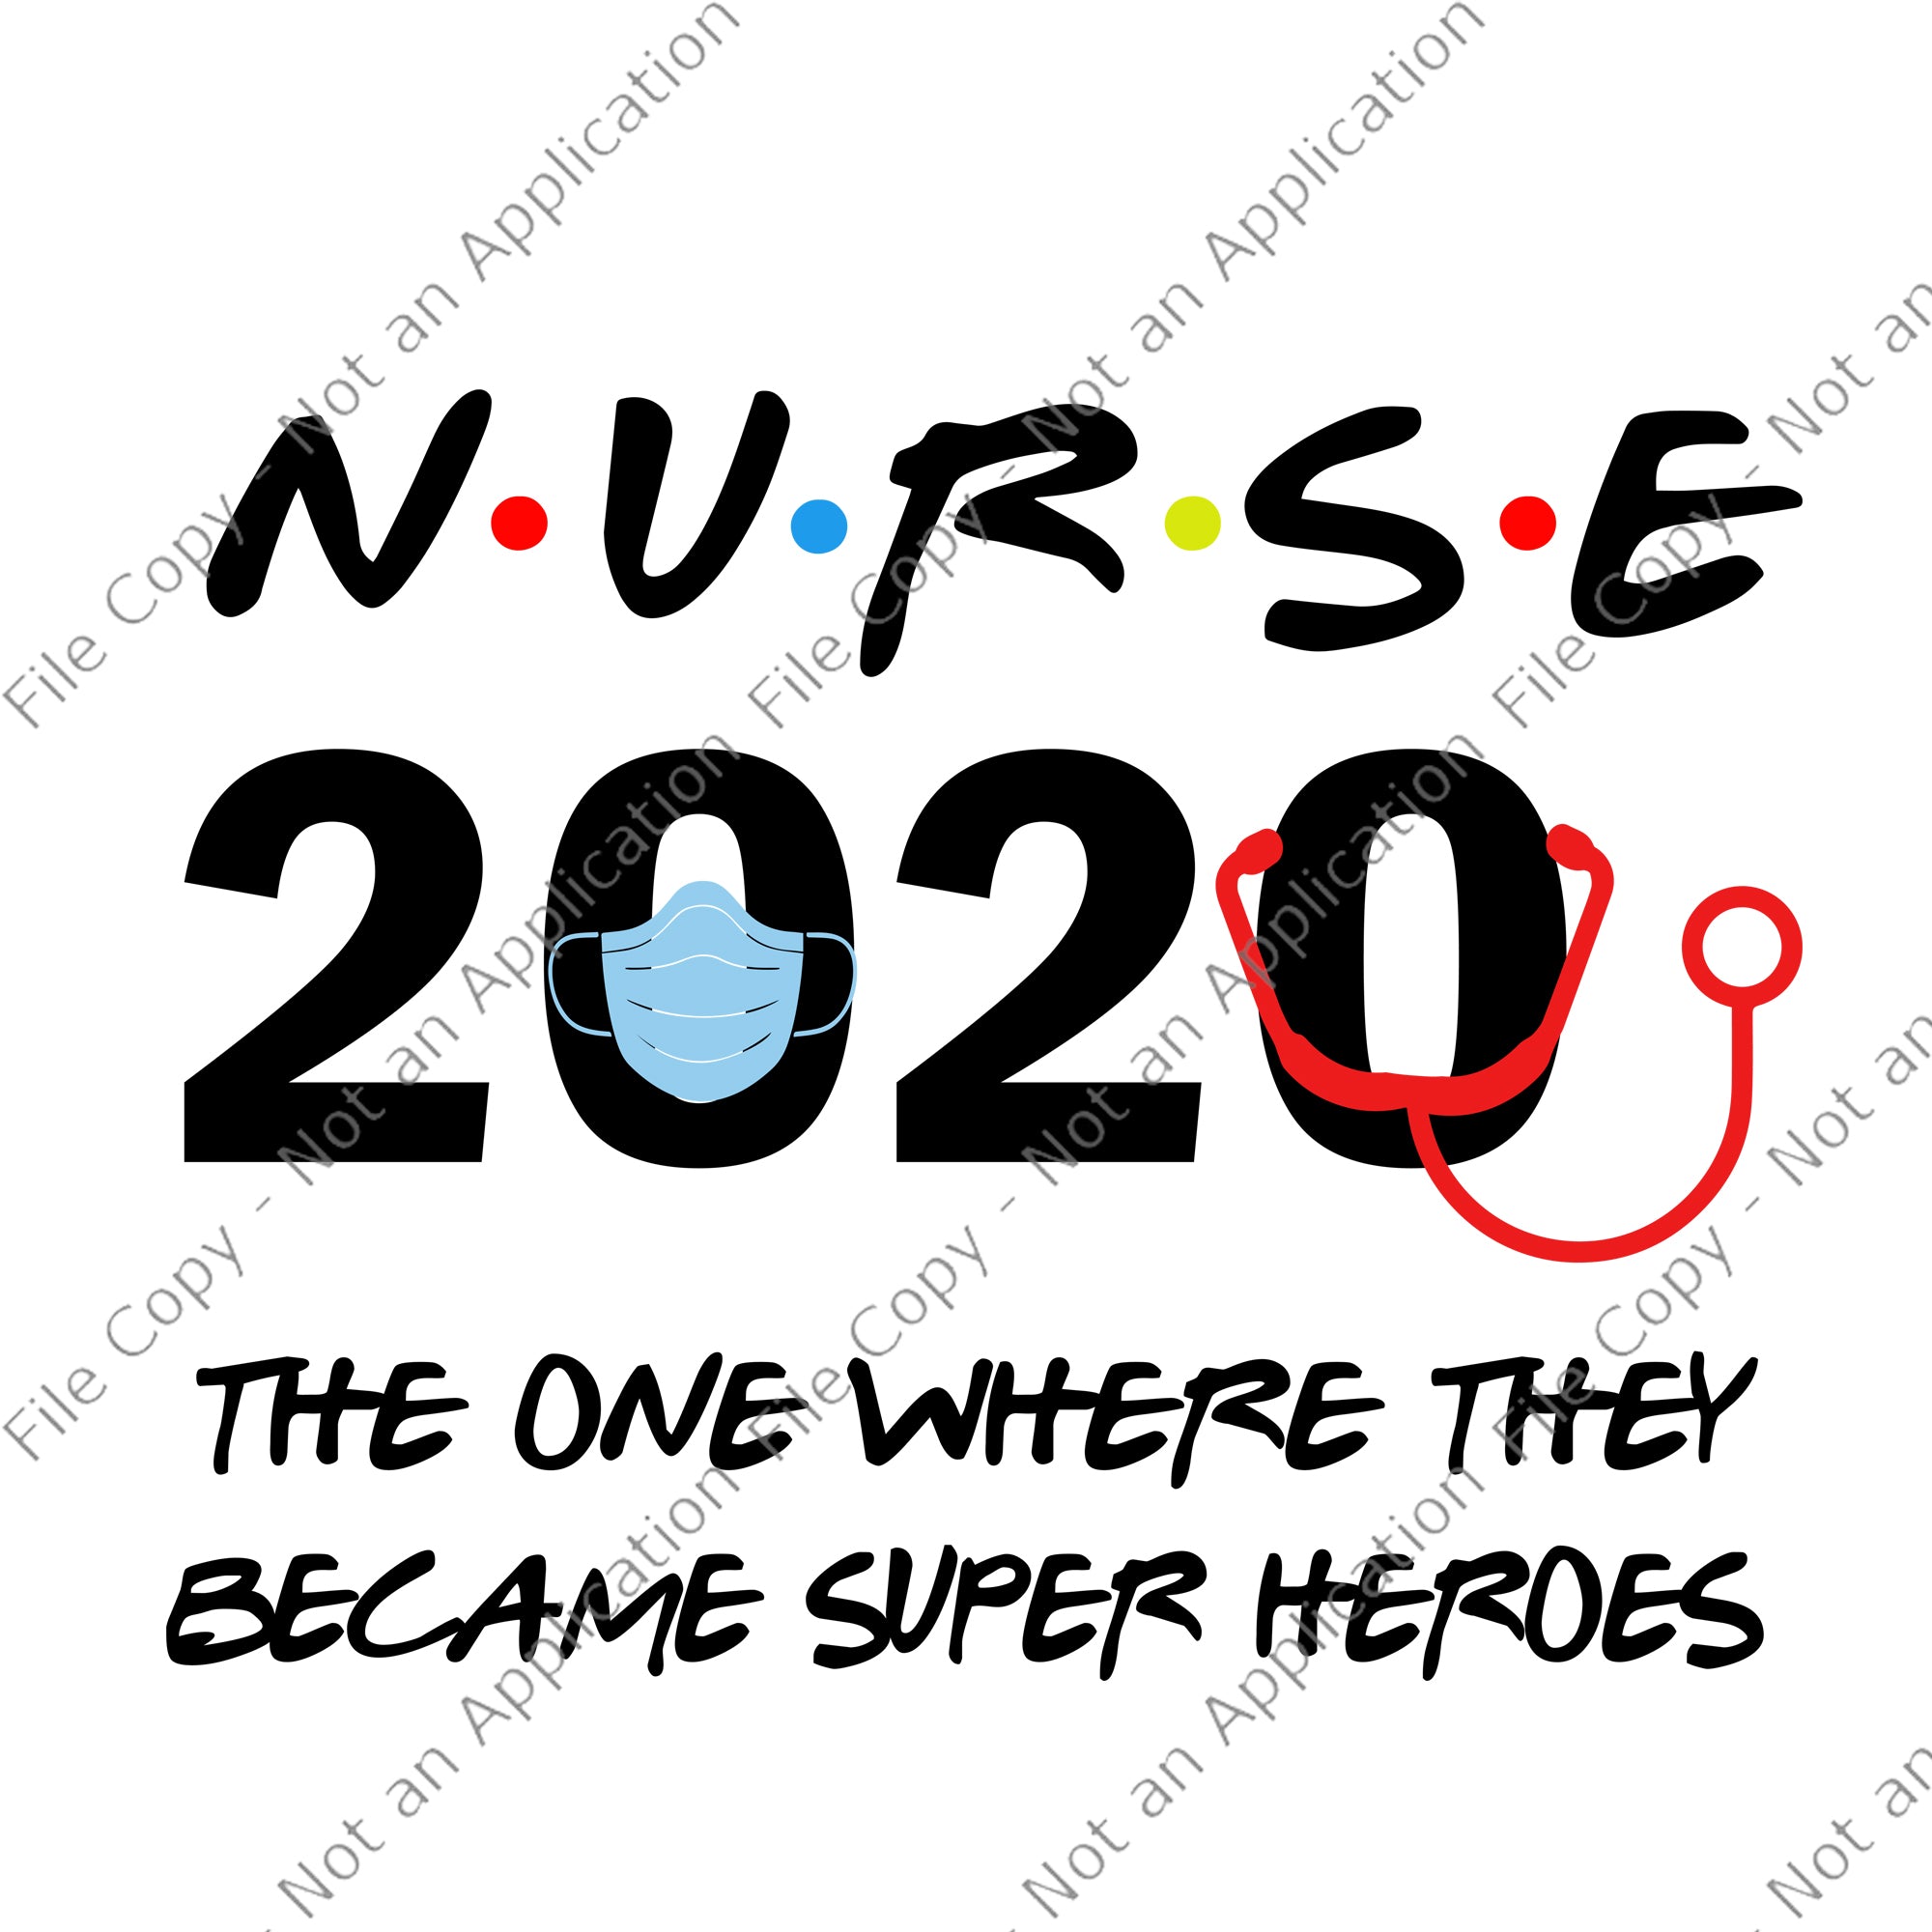 Nurse 2020 svg, nurse i’ll be there for you 2020 quarantine svg, nurse i’ll be there for you 2020 quarantine, nurse 2020 svg, nurse 2020